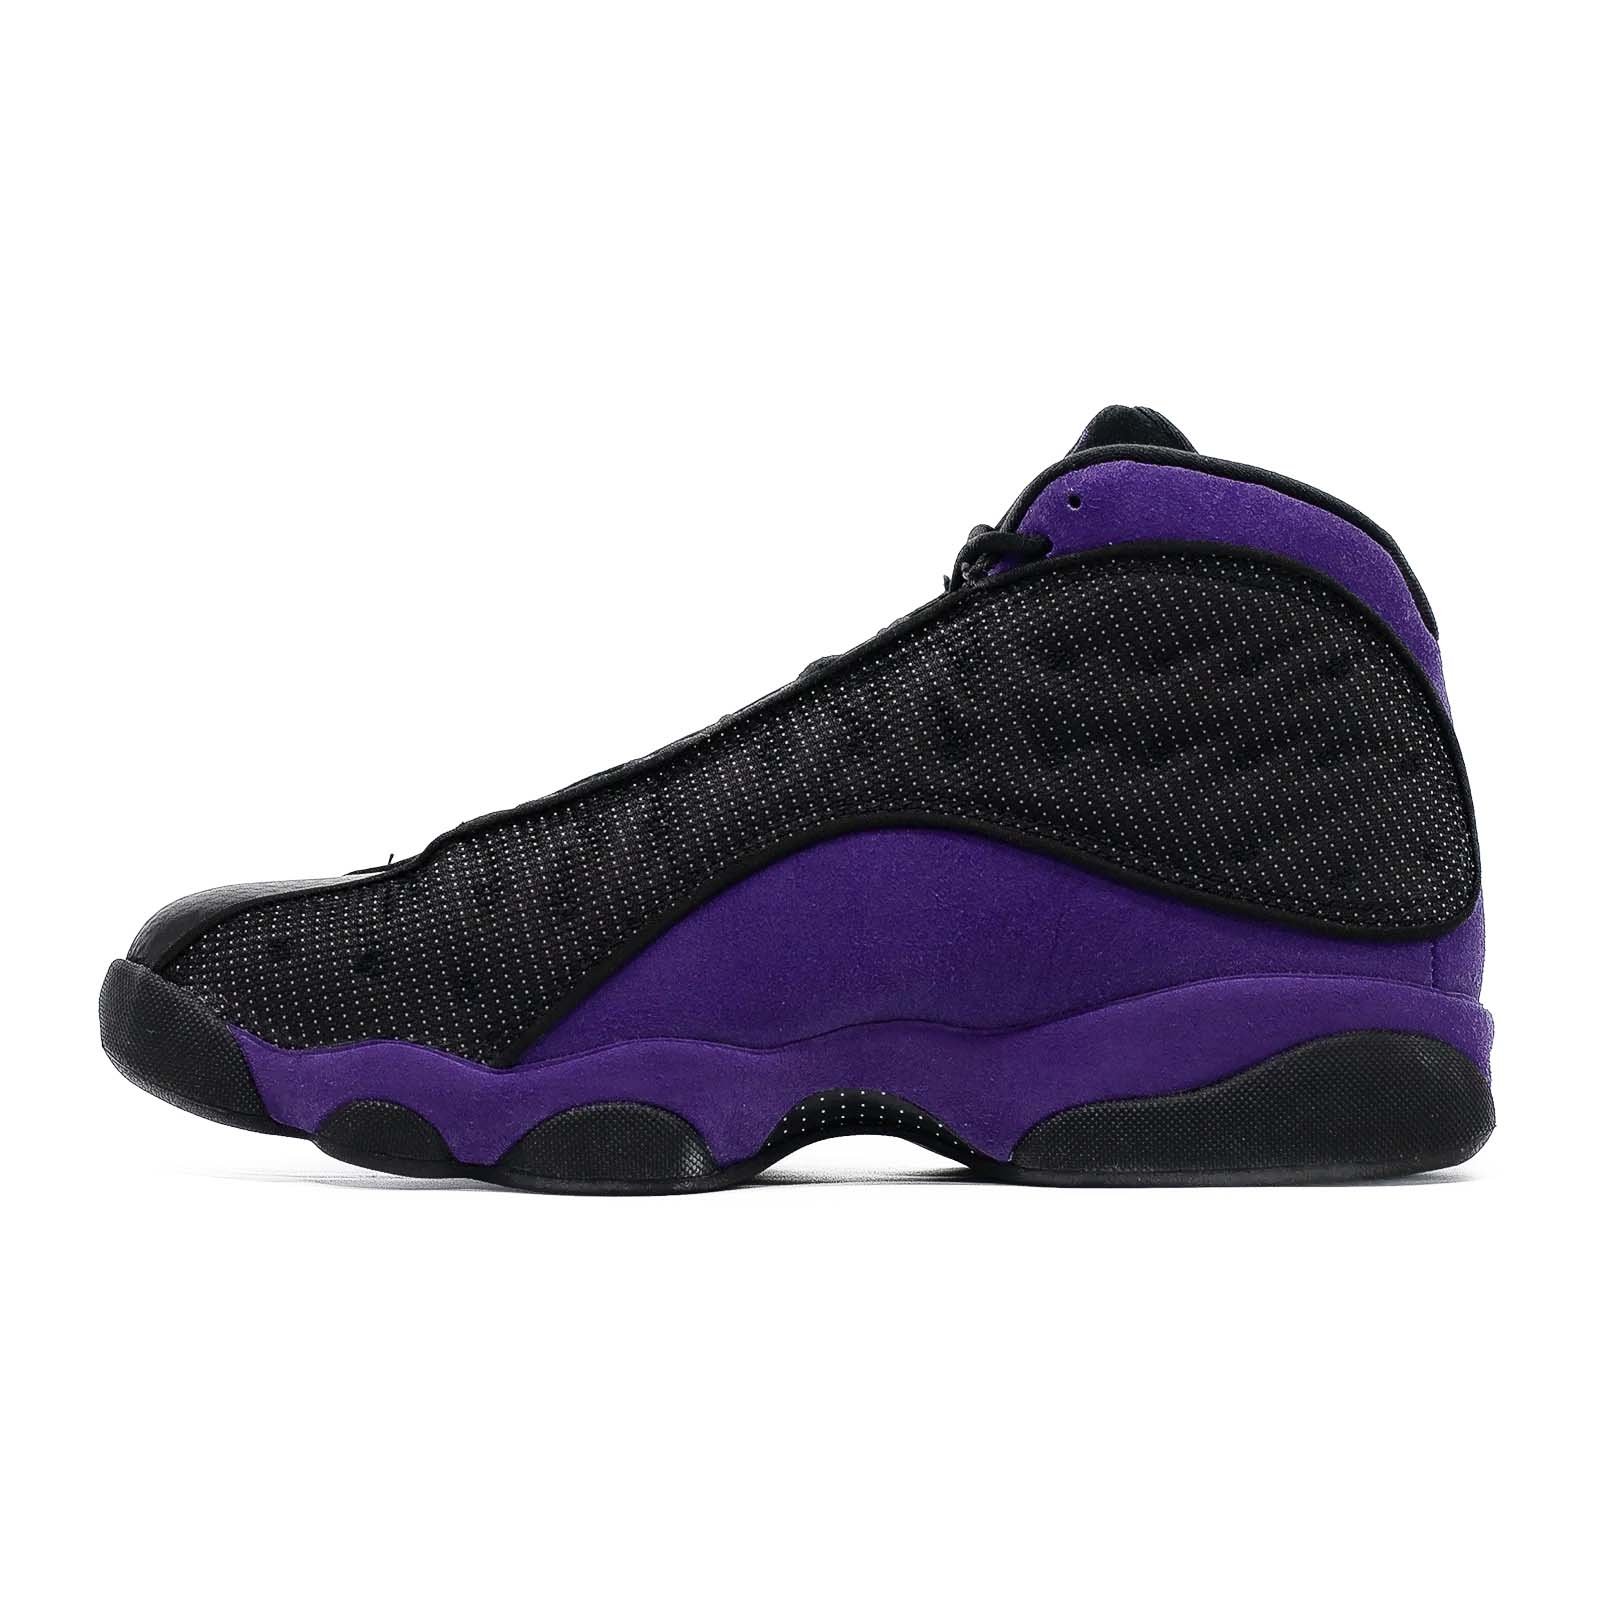 Air Jordan 13, Court Purple